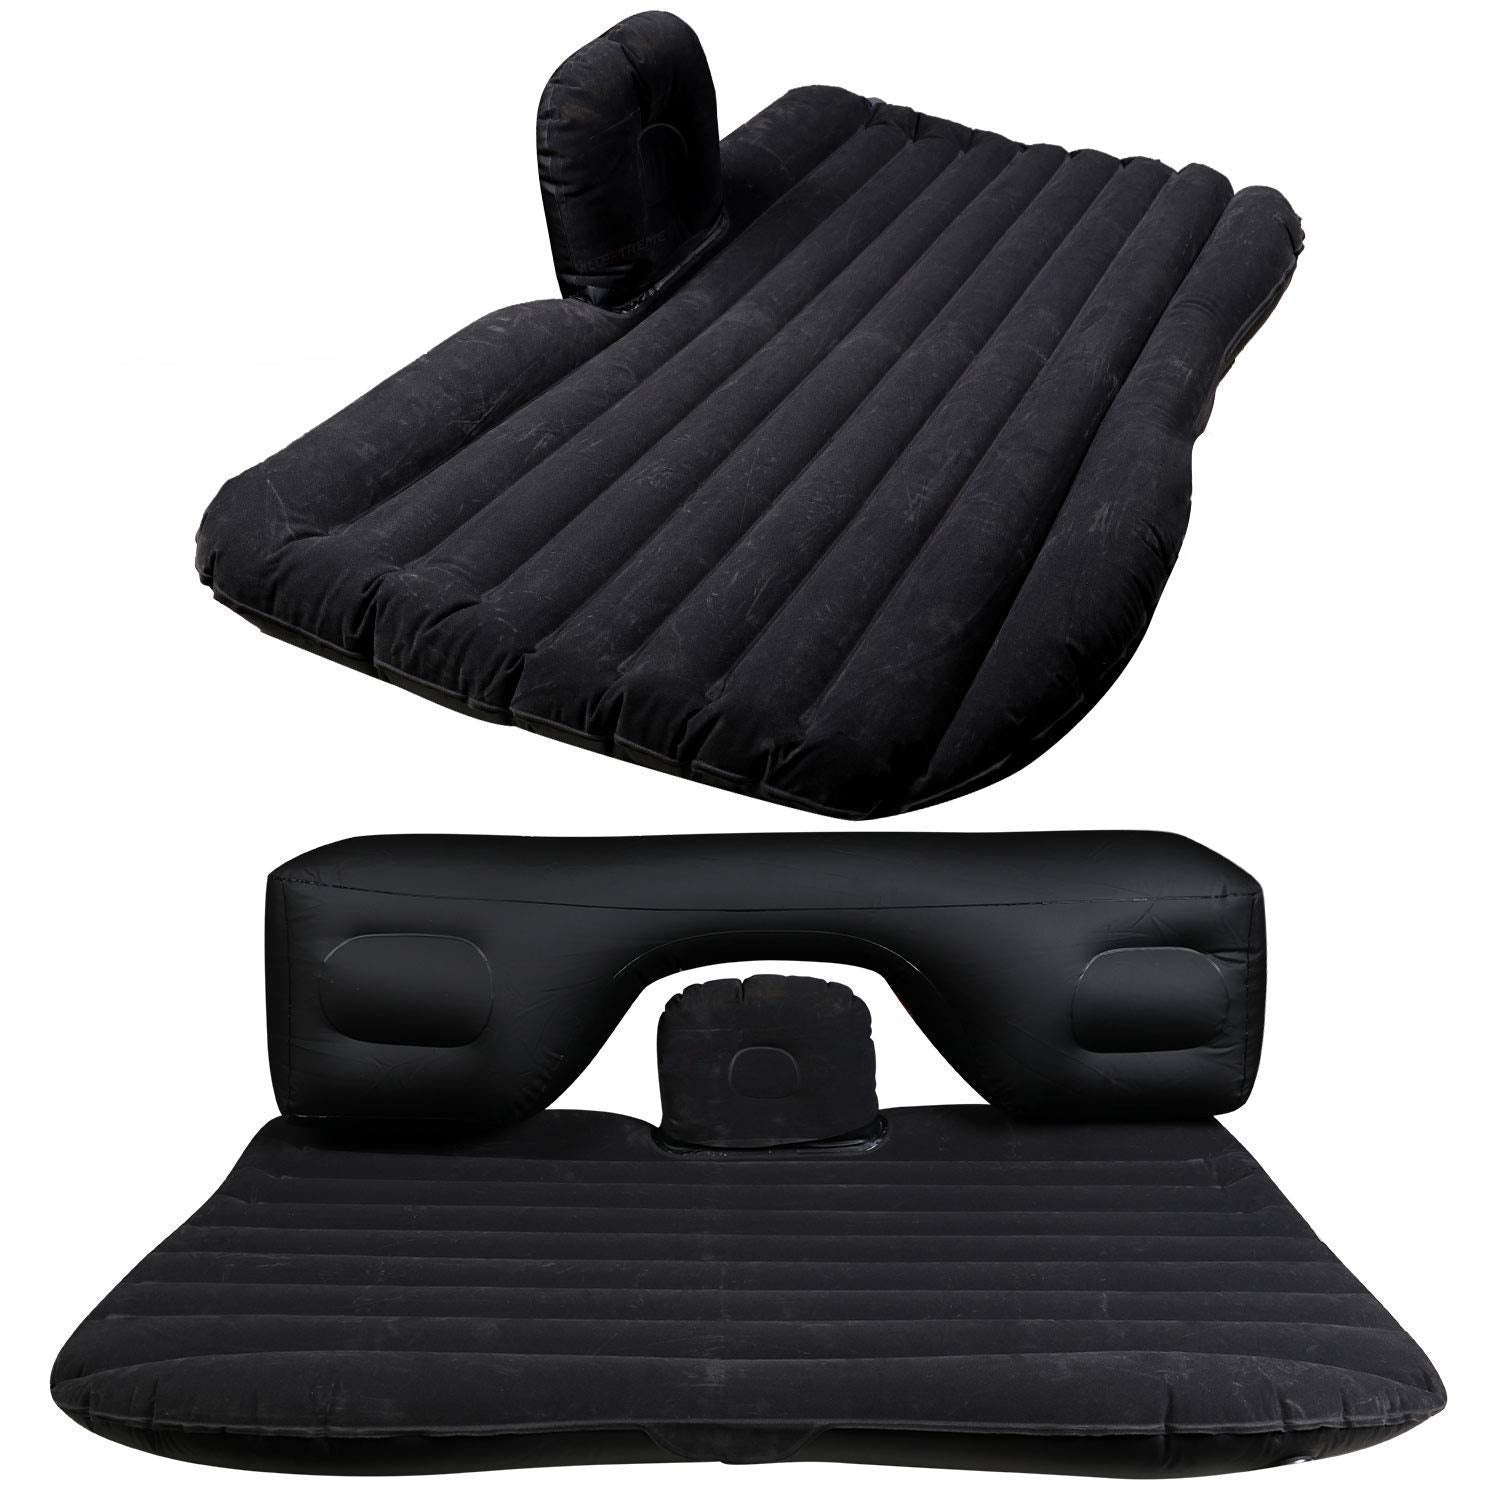 SKYTONE Travel Inflatable Car Bed Mattress (BLACK)